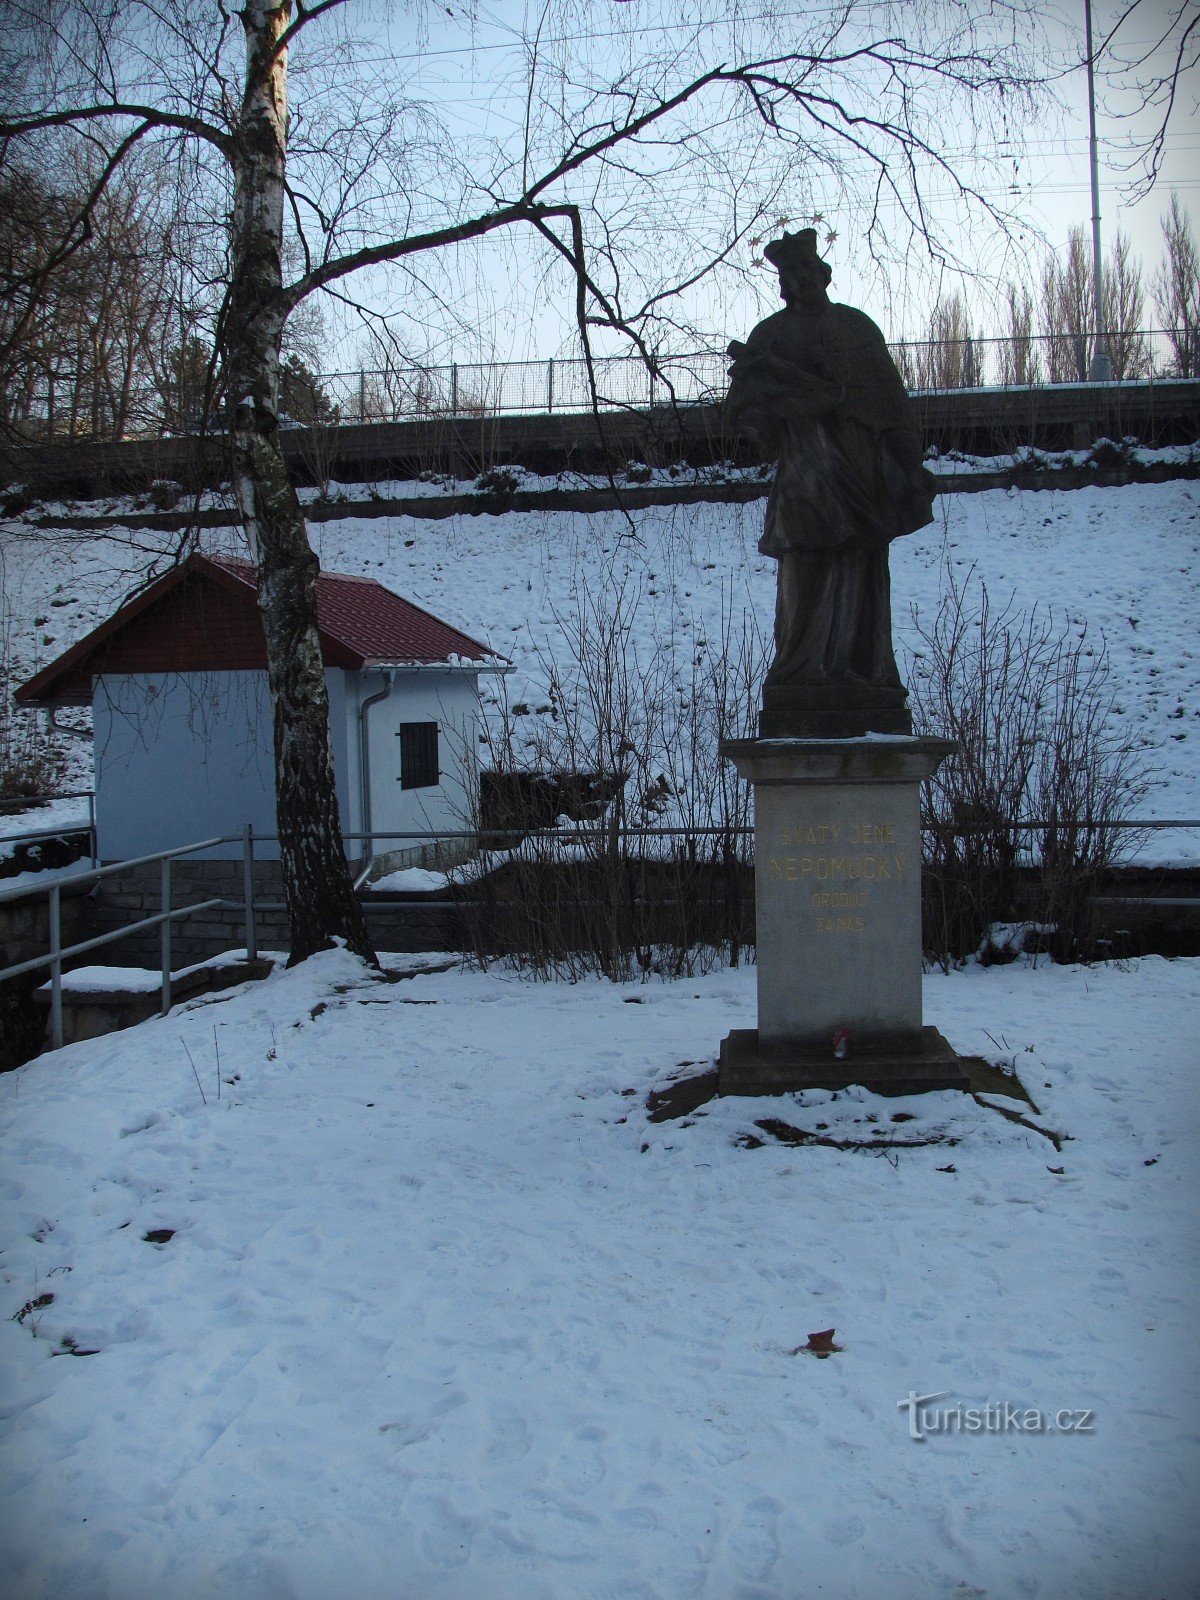 Zlín - άγαλμα του Αγίου Ιωάννη του Nepomuk